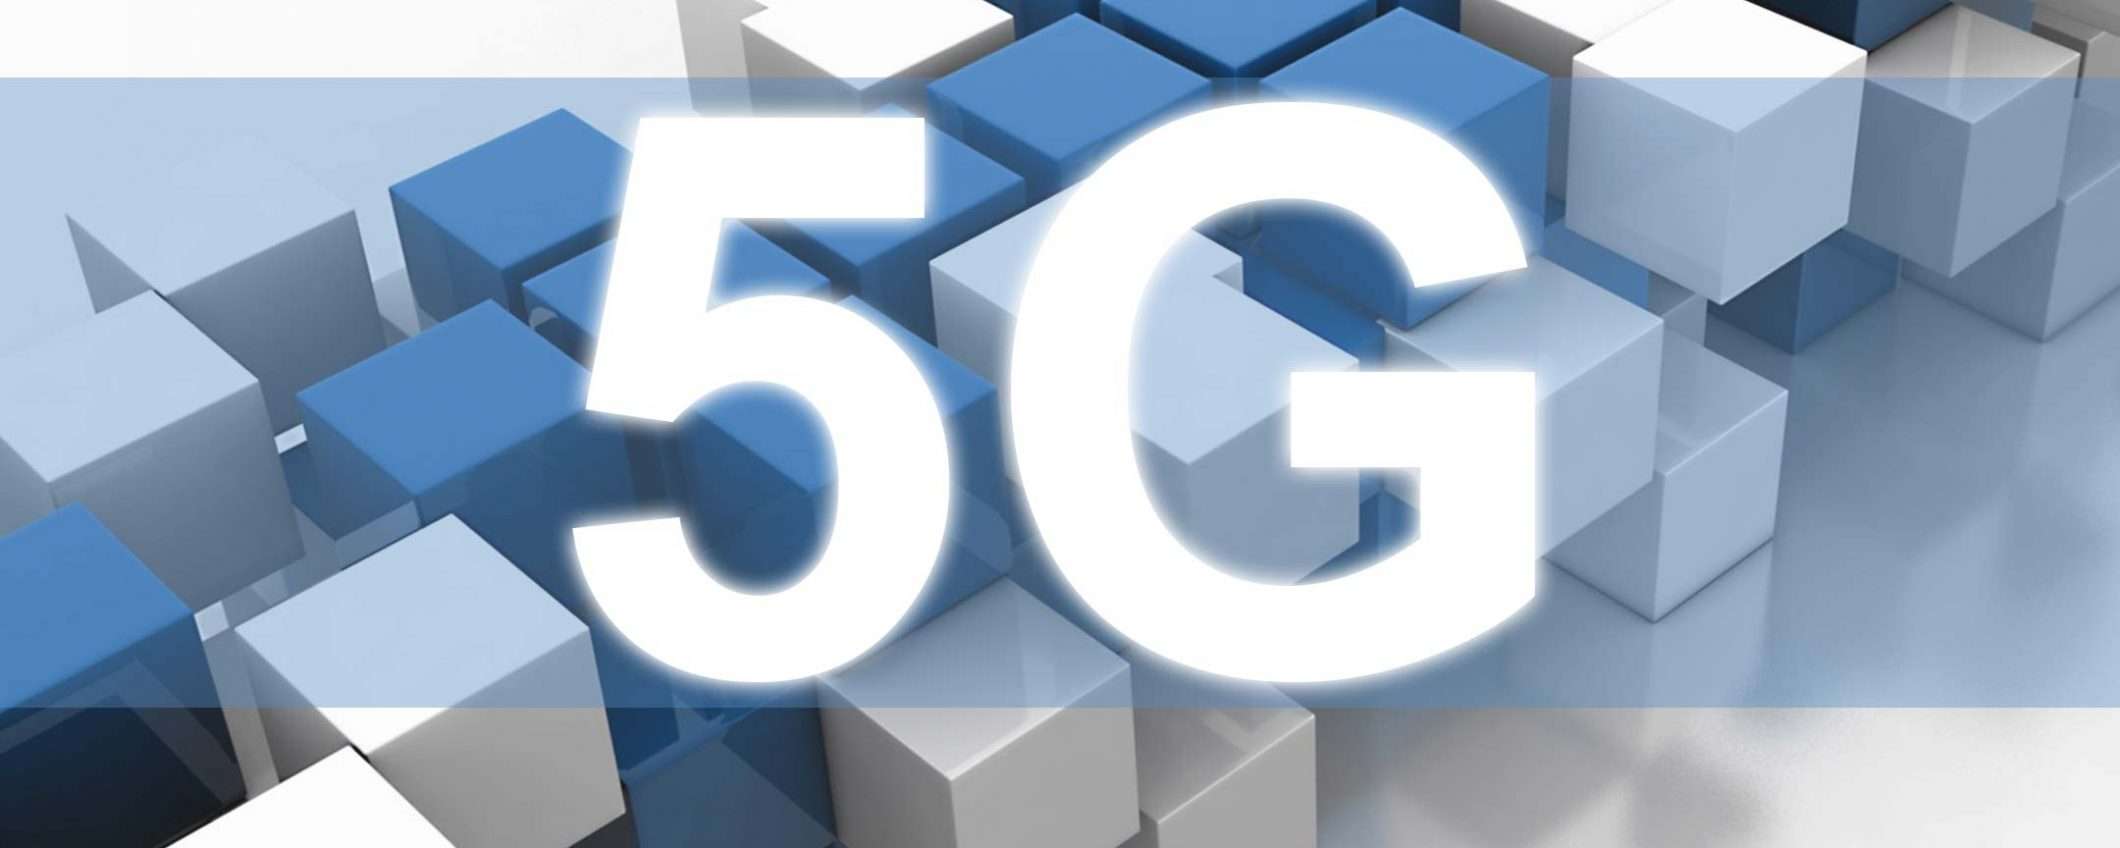 Il report Five ways to a Better 5G di Ericsson